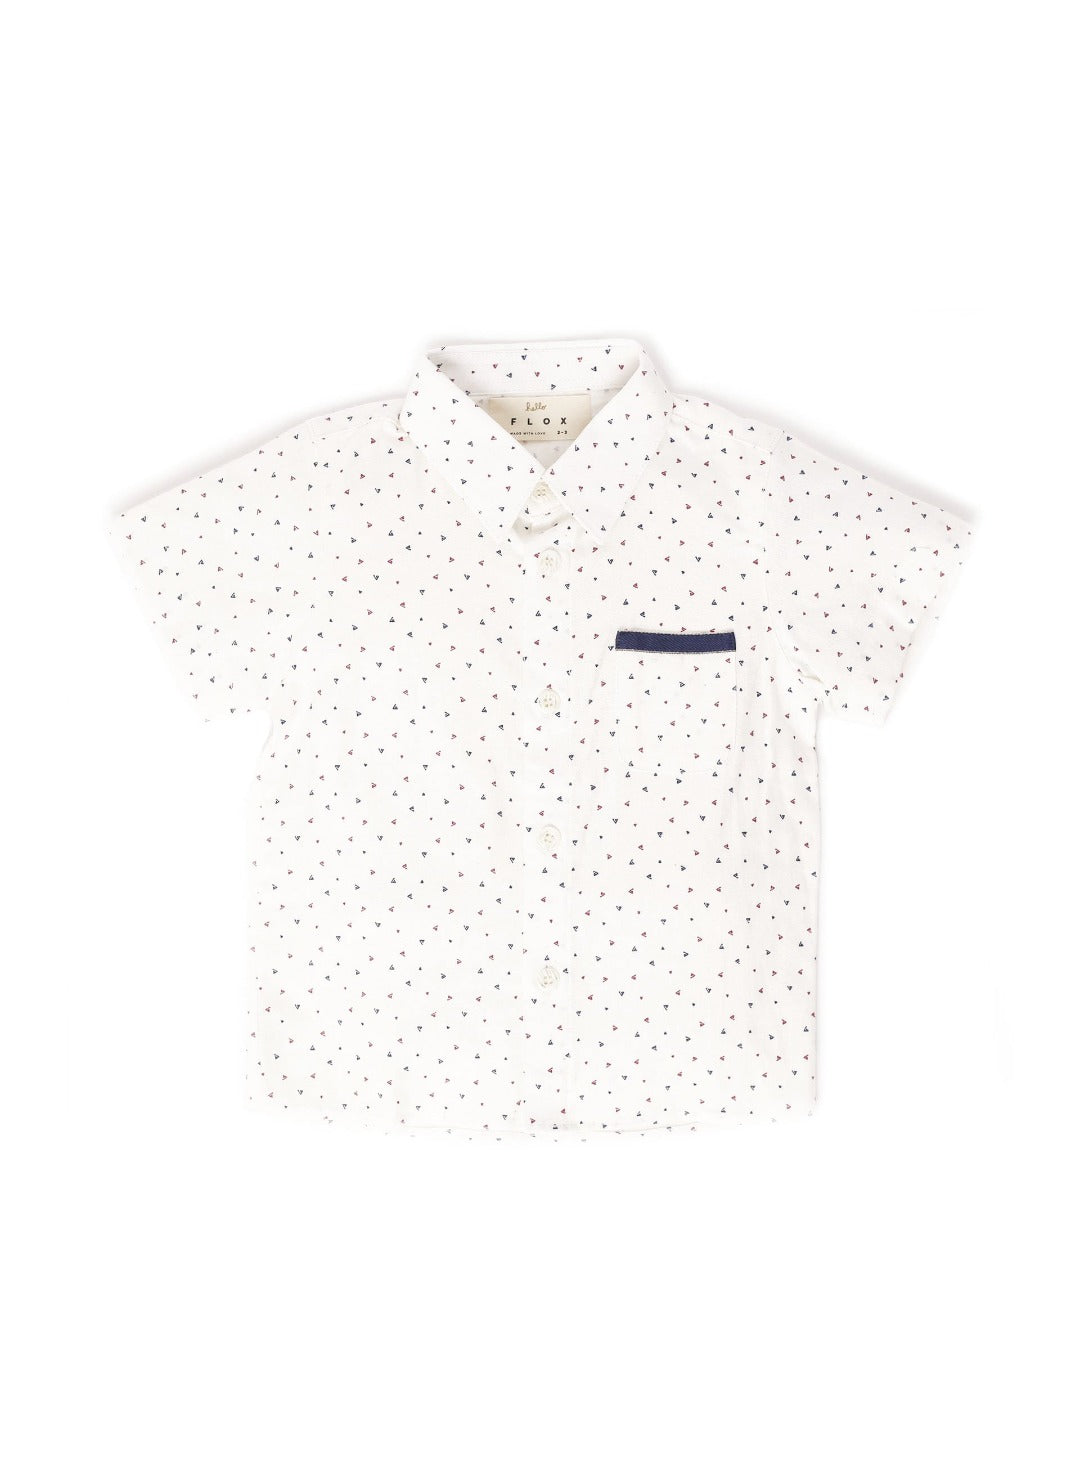 milk white shirt with petite triangle print